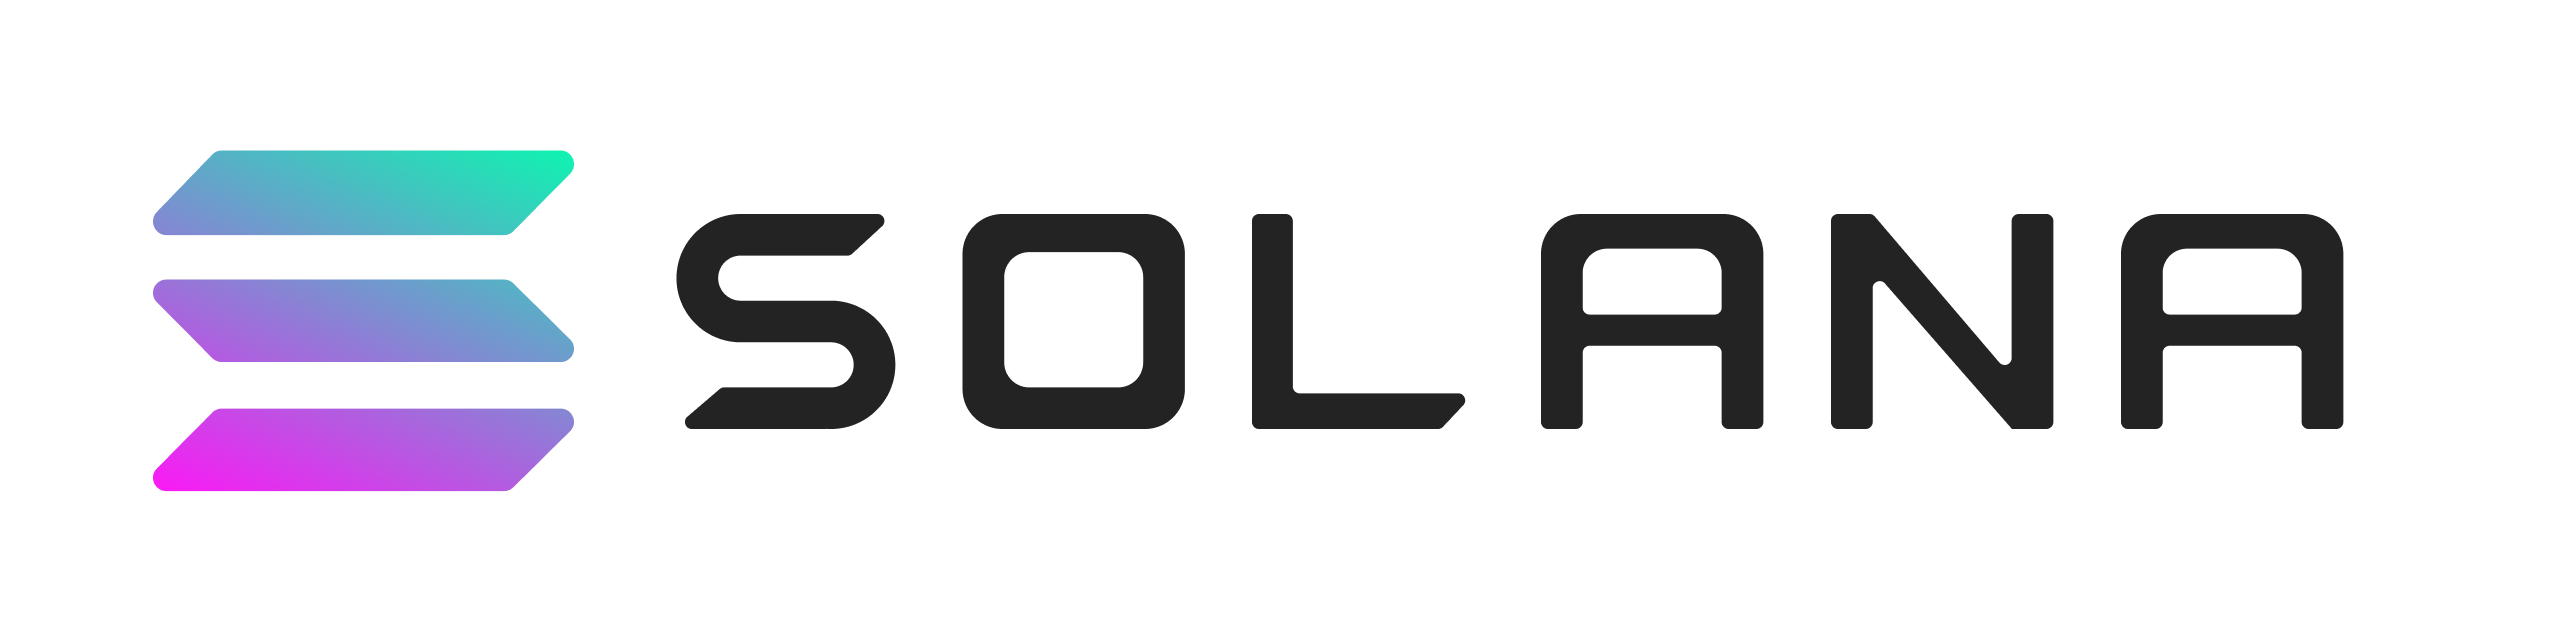 Sol space. Solana Labs. Солана криптовалюта. Solana Sol logo. Solana (Blockchain platform).